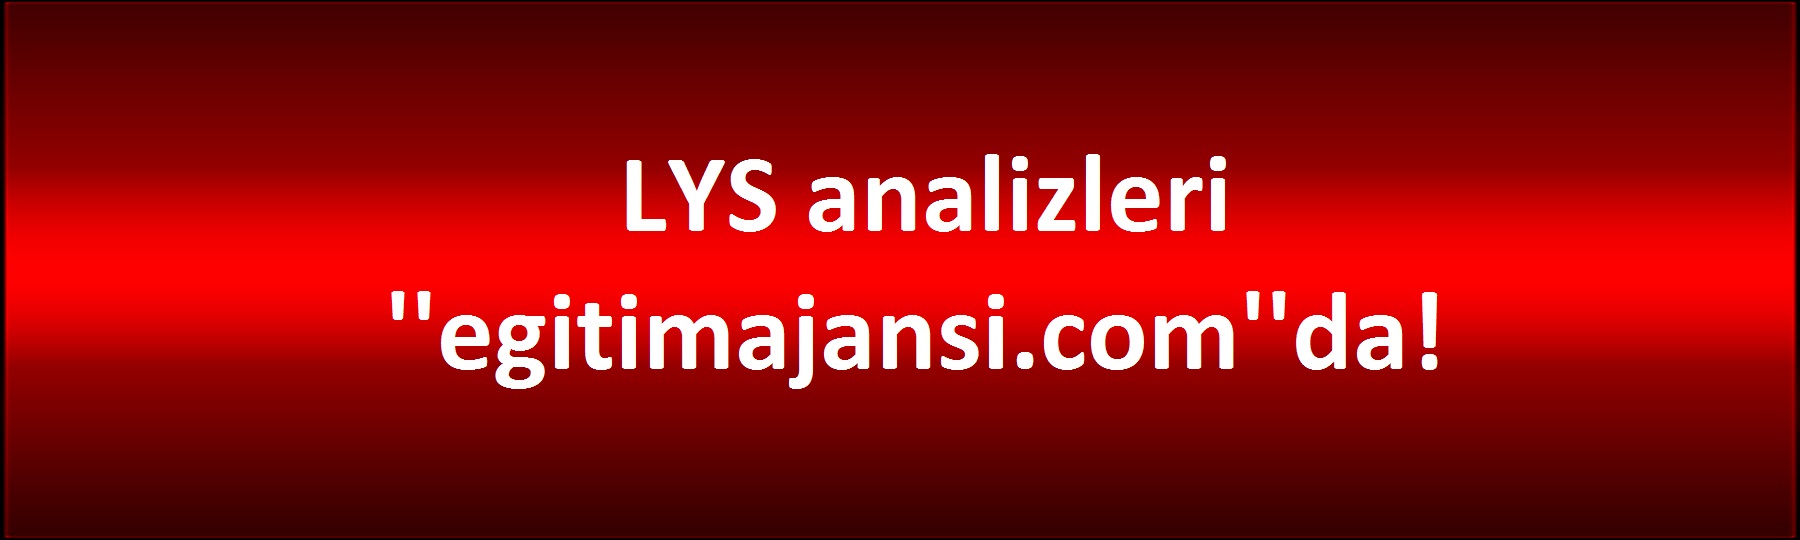 LYS analizleri ''egitimajansi.com''da olacak!